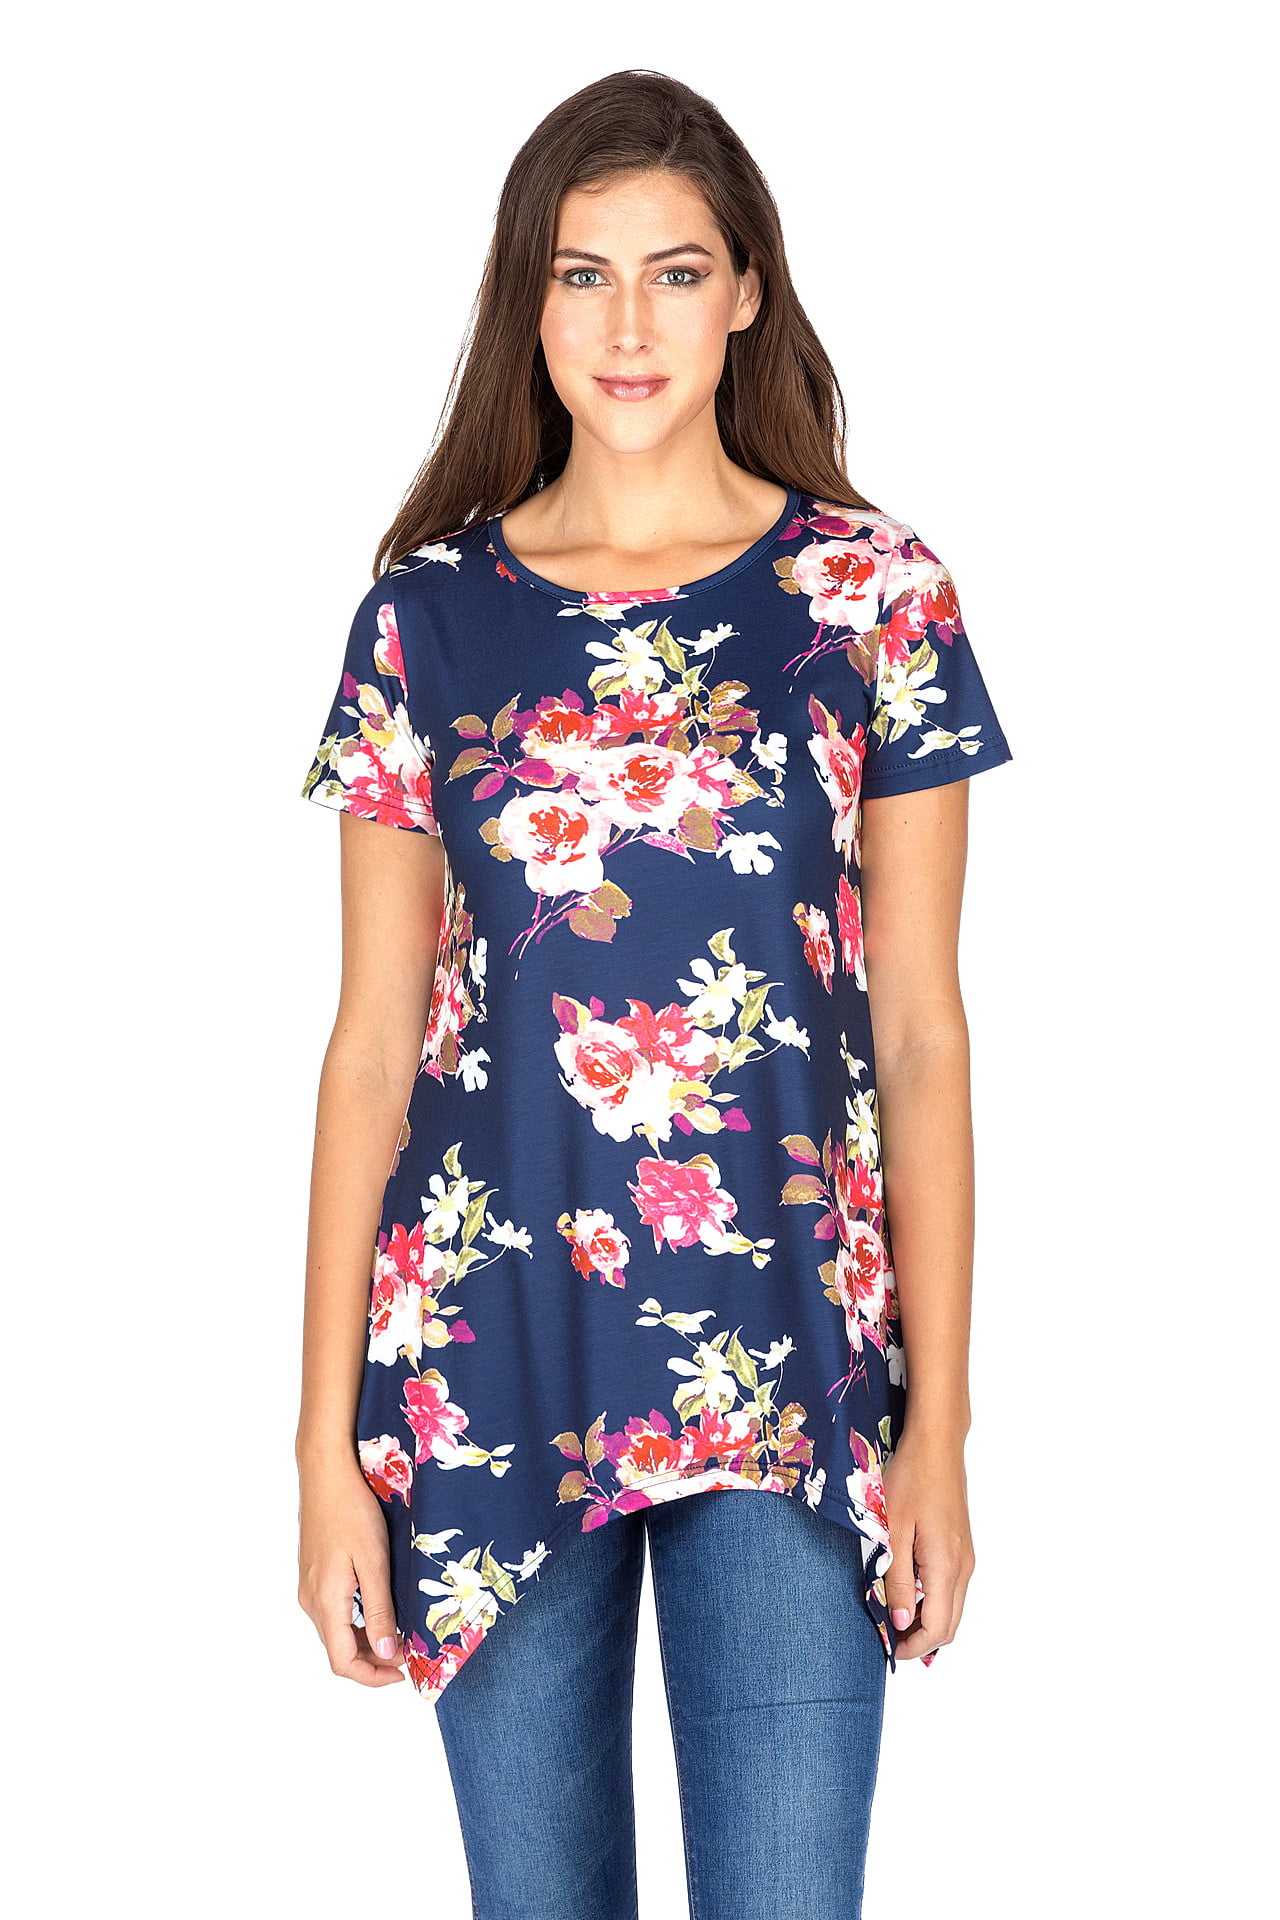 Women's Floral Tunic Top - Walmart.com